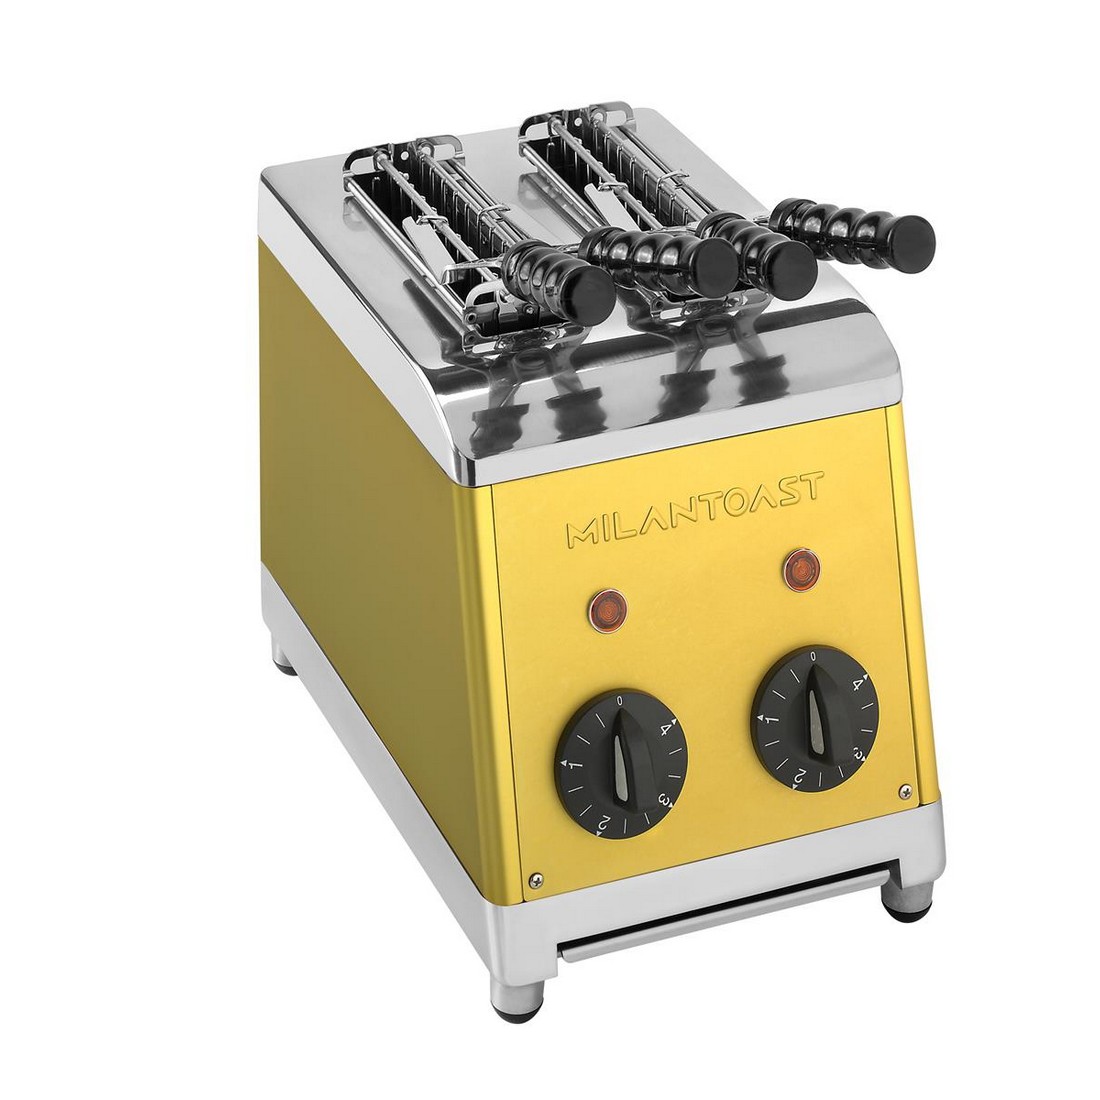 Toaster 2 tongs GOLD 220-240v 50/60hz 1,37kw